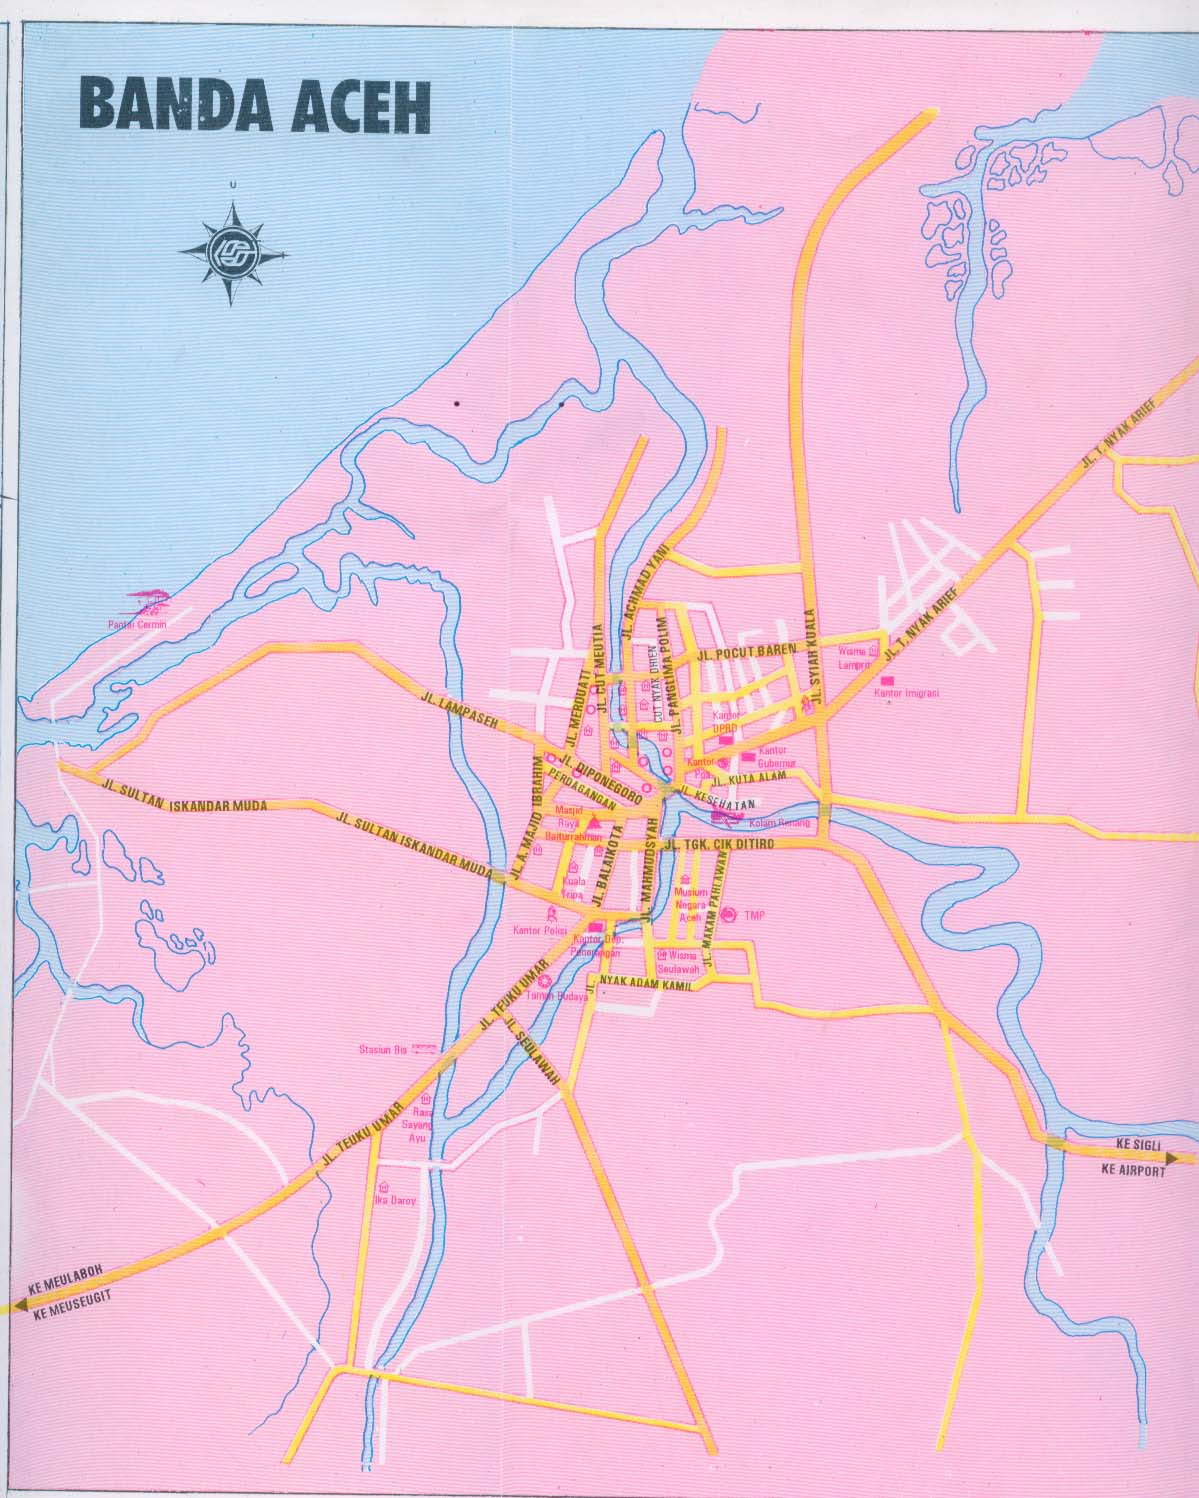 AMAZING INDONESIA: BANDA ACEH CITY MAP